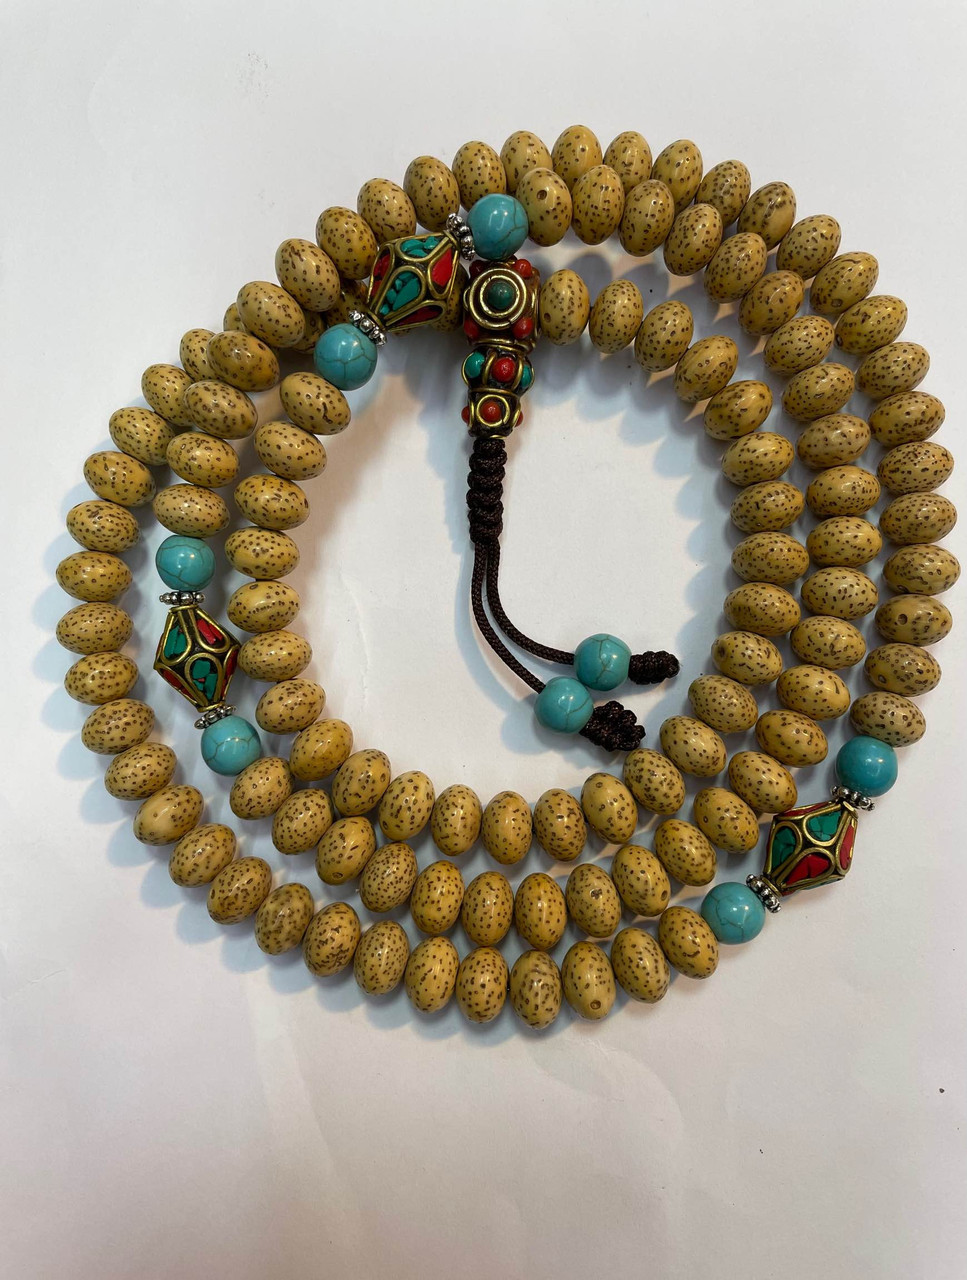 Bodhisattva Old Yak Wrist Mala-Turquoise with Tibetan Agate Bead